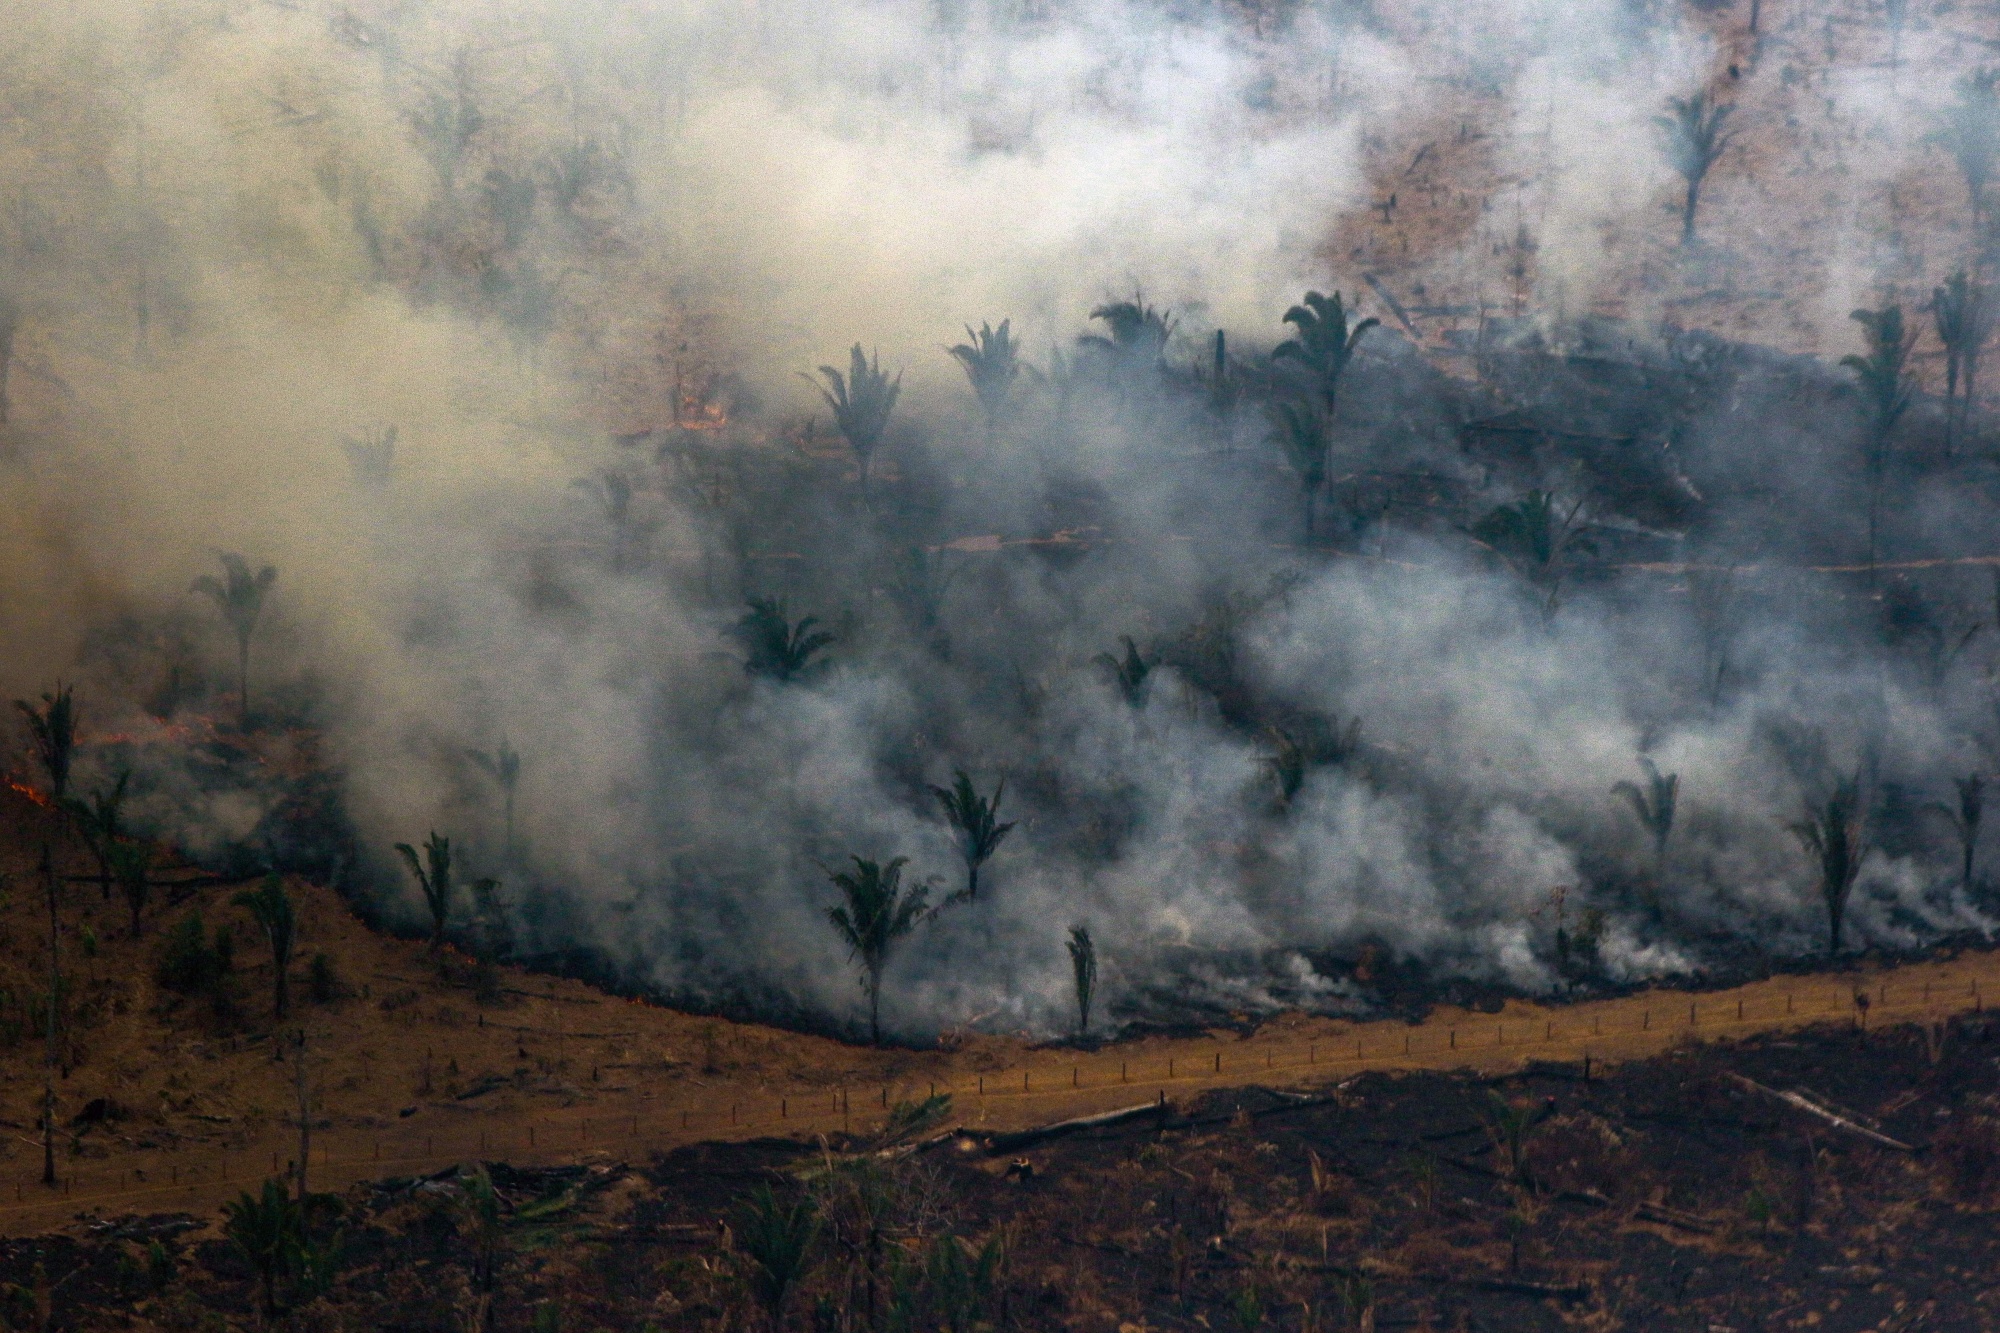 TOPSHOT-BRAZIL-FIRE-DEFORESTATION-AMAZON